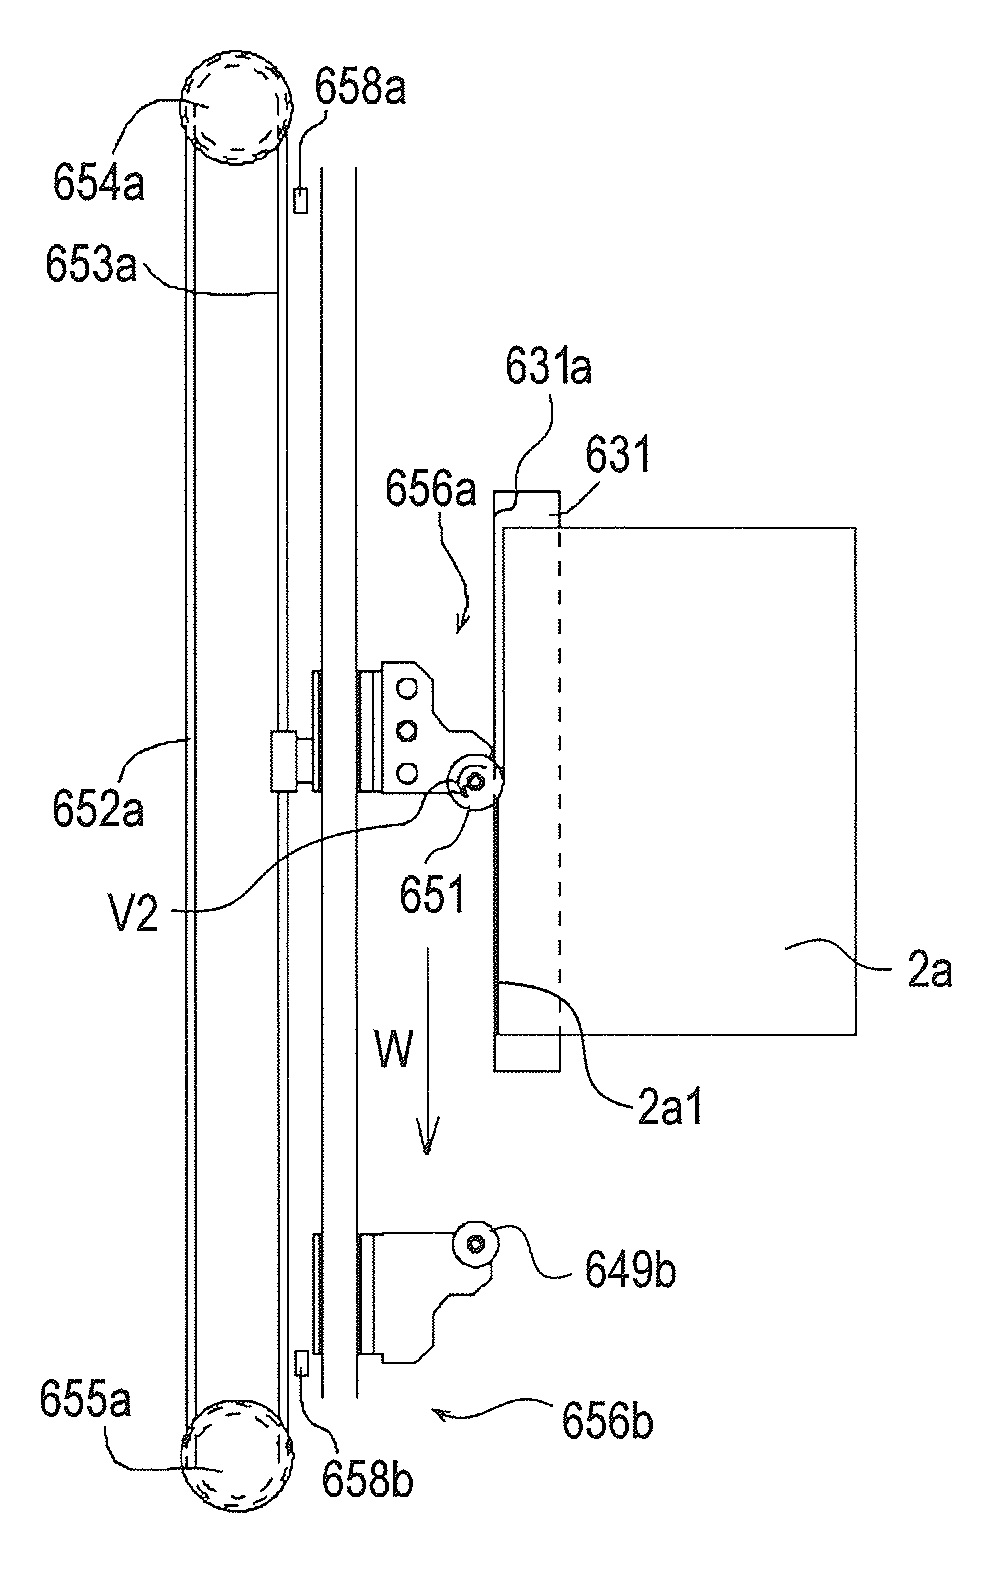 Sheet post-processing apparatus and image forming apparatus